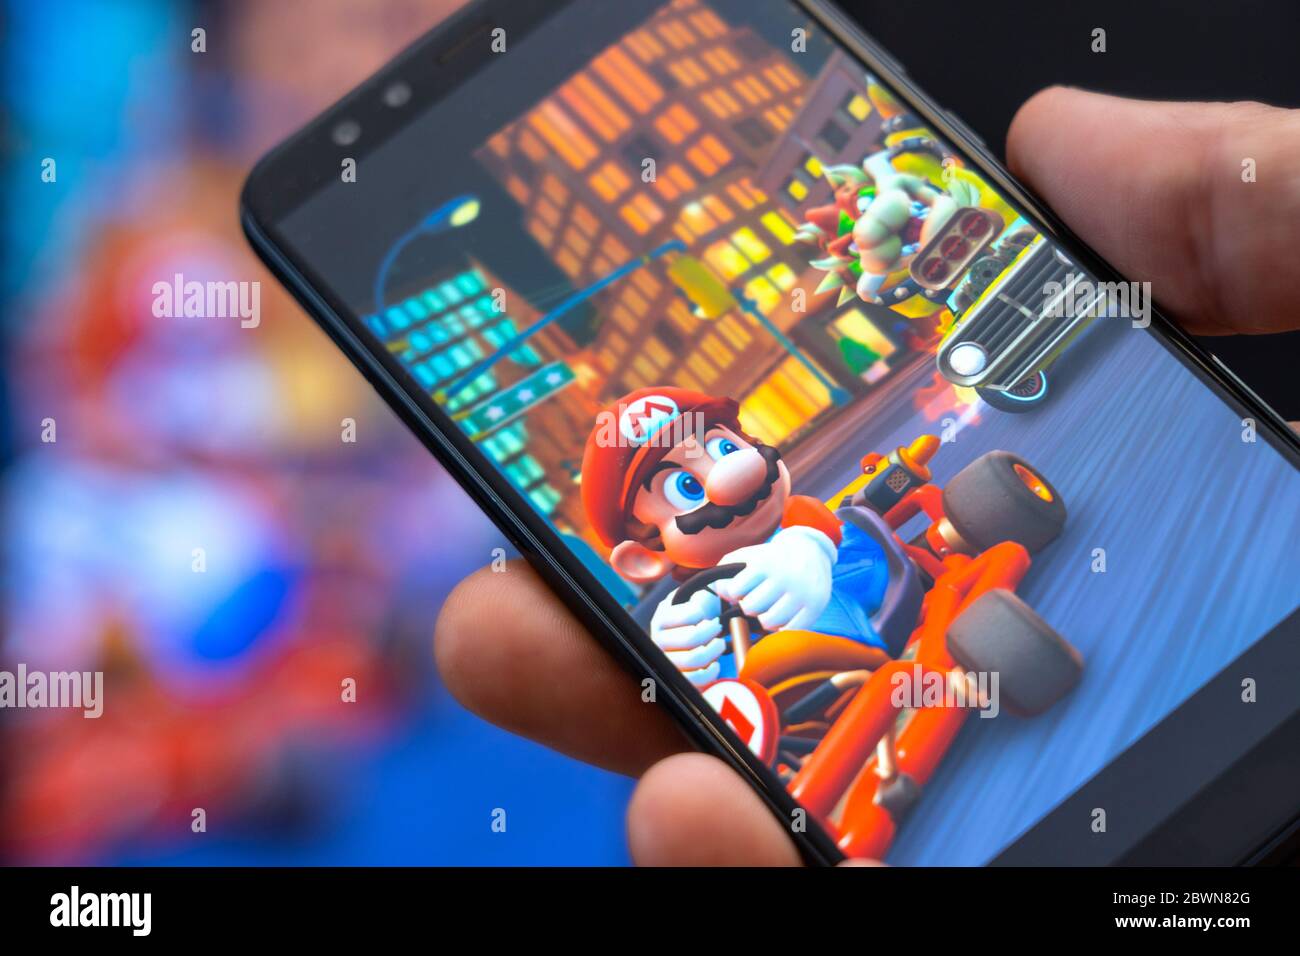 Mario Kart Tour is Nintendo's biggest mobile game launch ever - PhoneArena